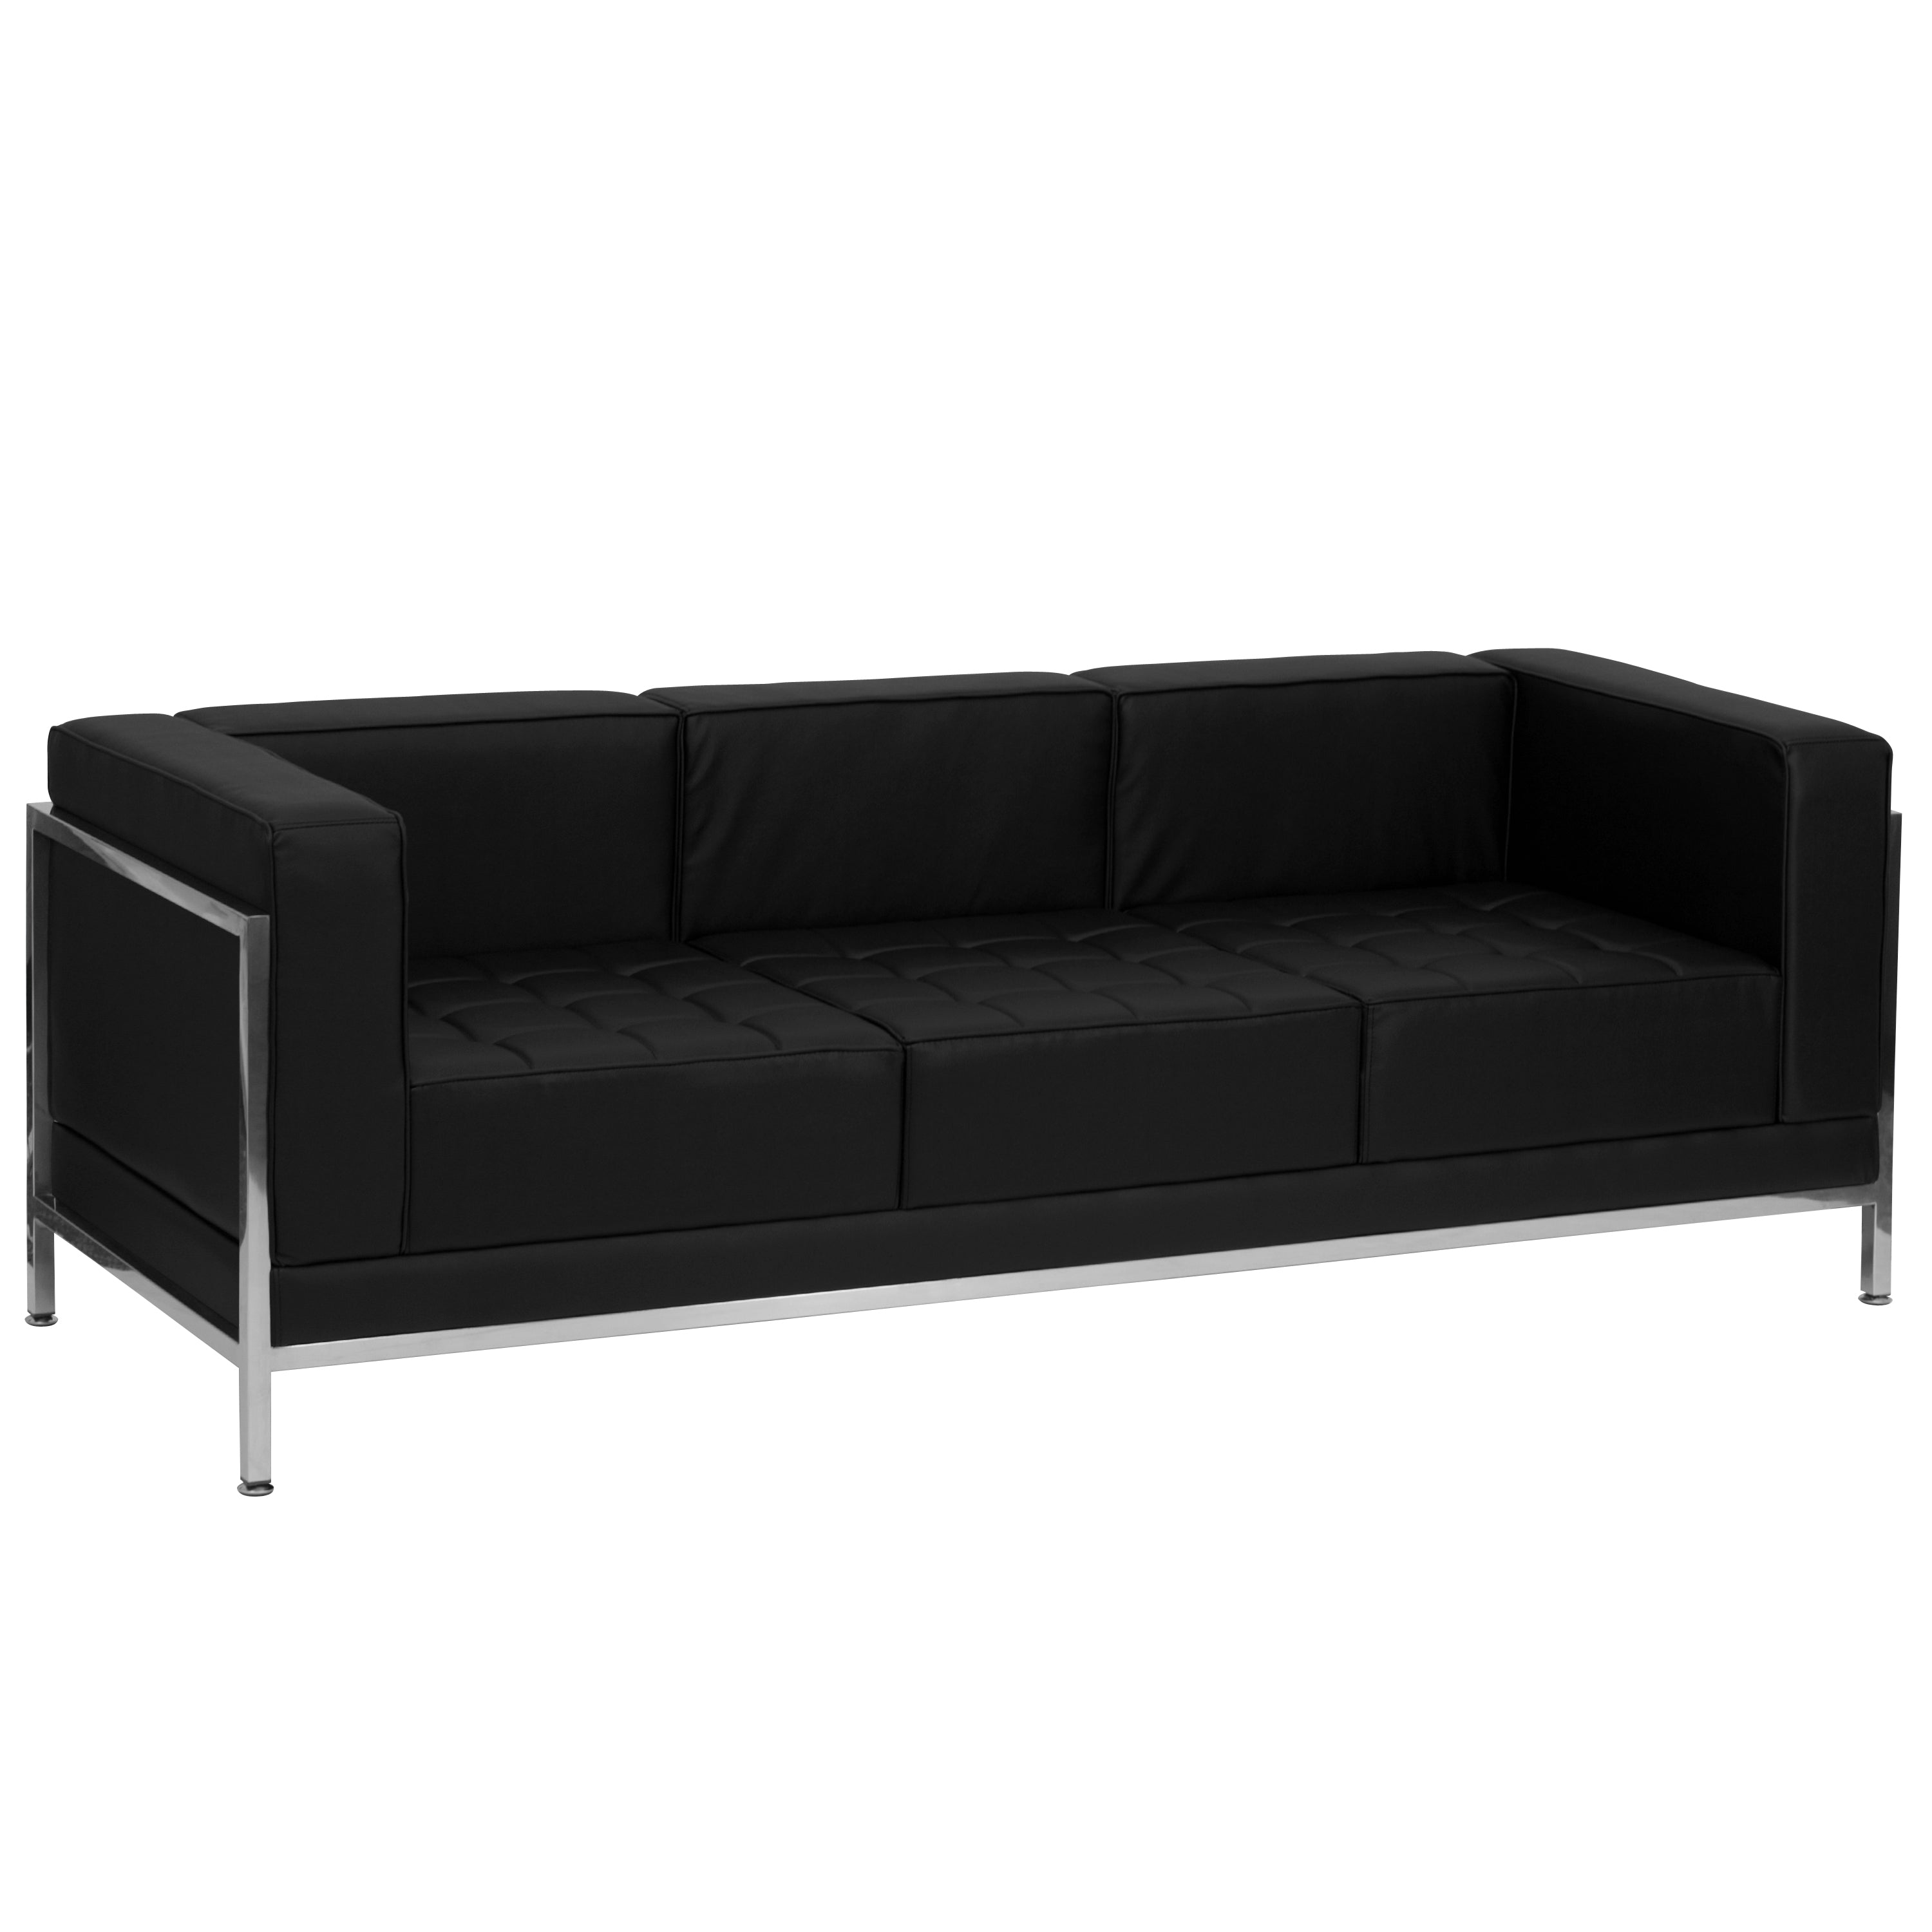 HERCULES Imagination Series LeatherSoft Sofa & Chair Set-Modular Reception Set-Flash Furniture-Wall2Wall Furnishings